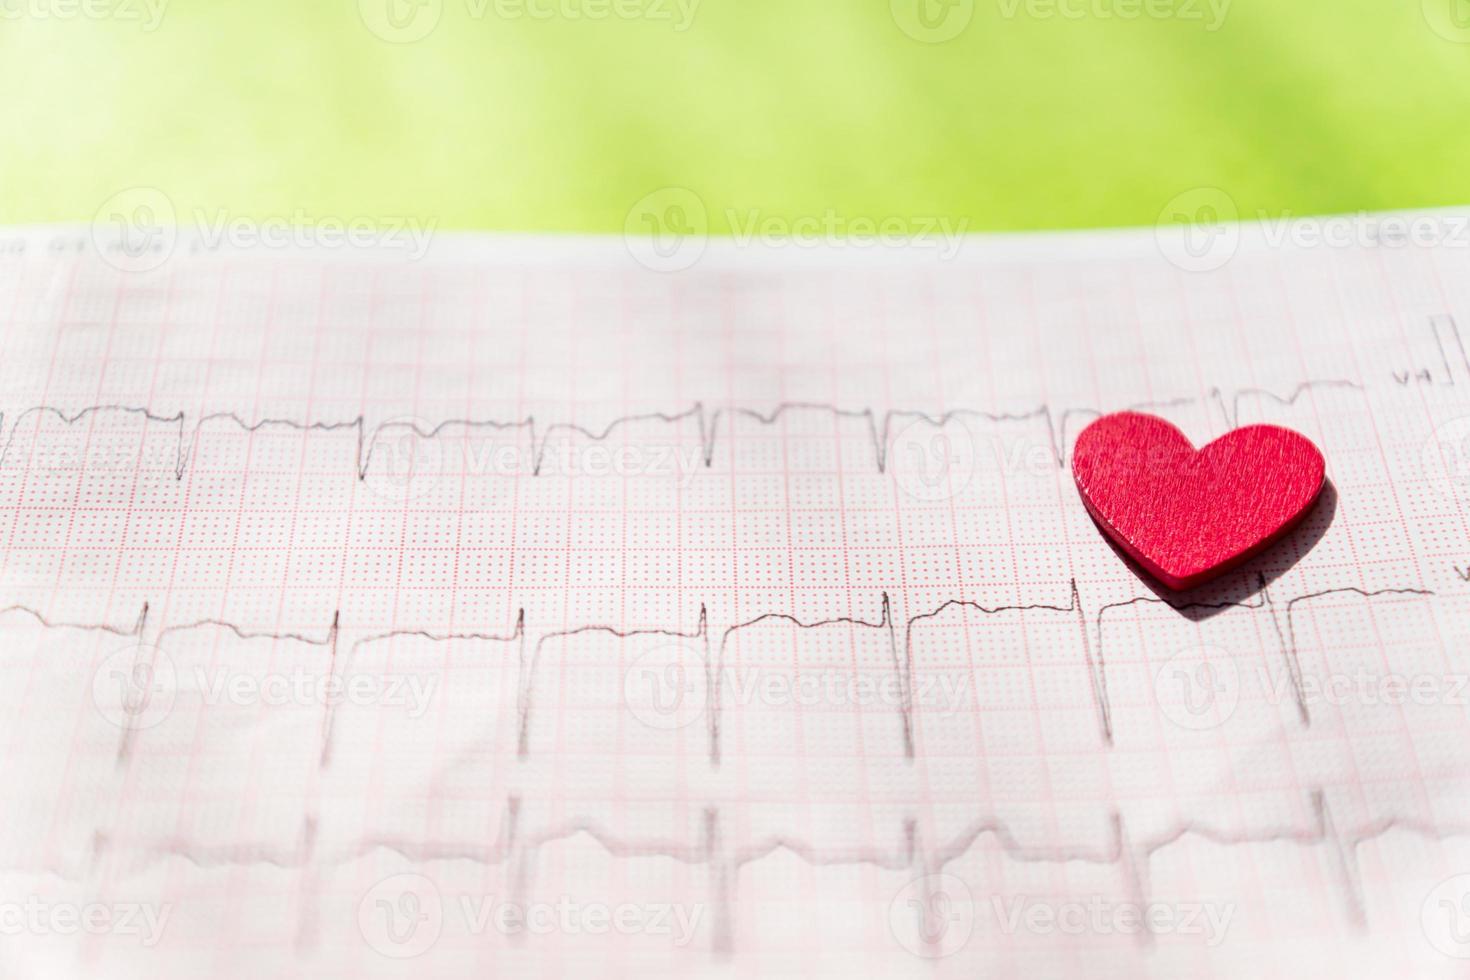 primer plano de un electrocardiograma en papel con corazón de madera roja. textura de fondo de papel ecg o ekg. concepto médico y sanitario. foto